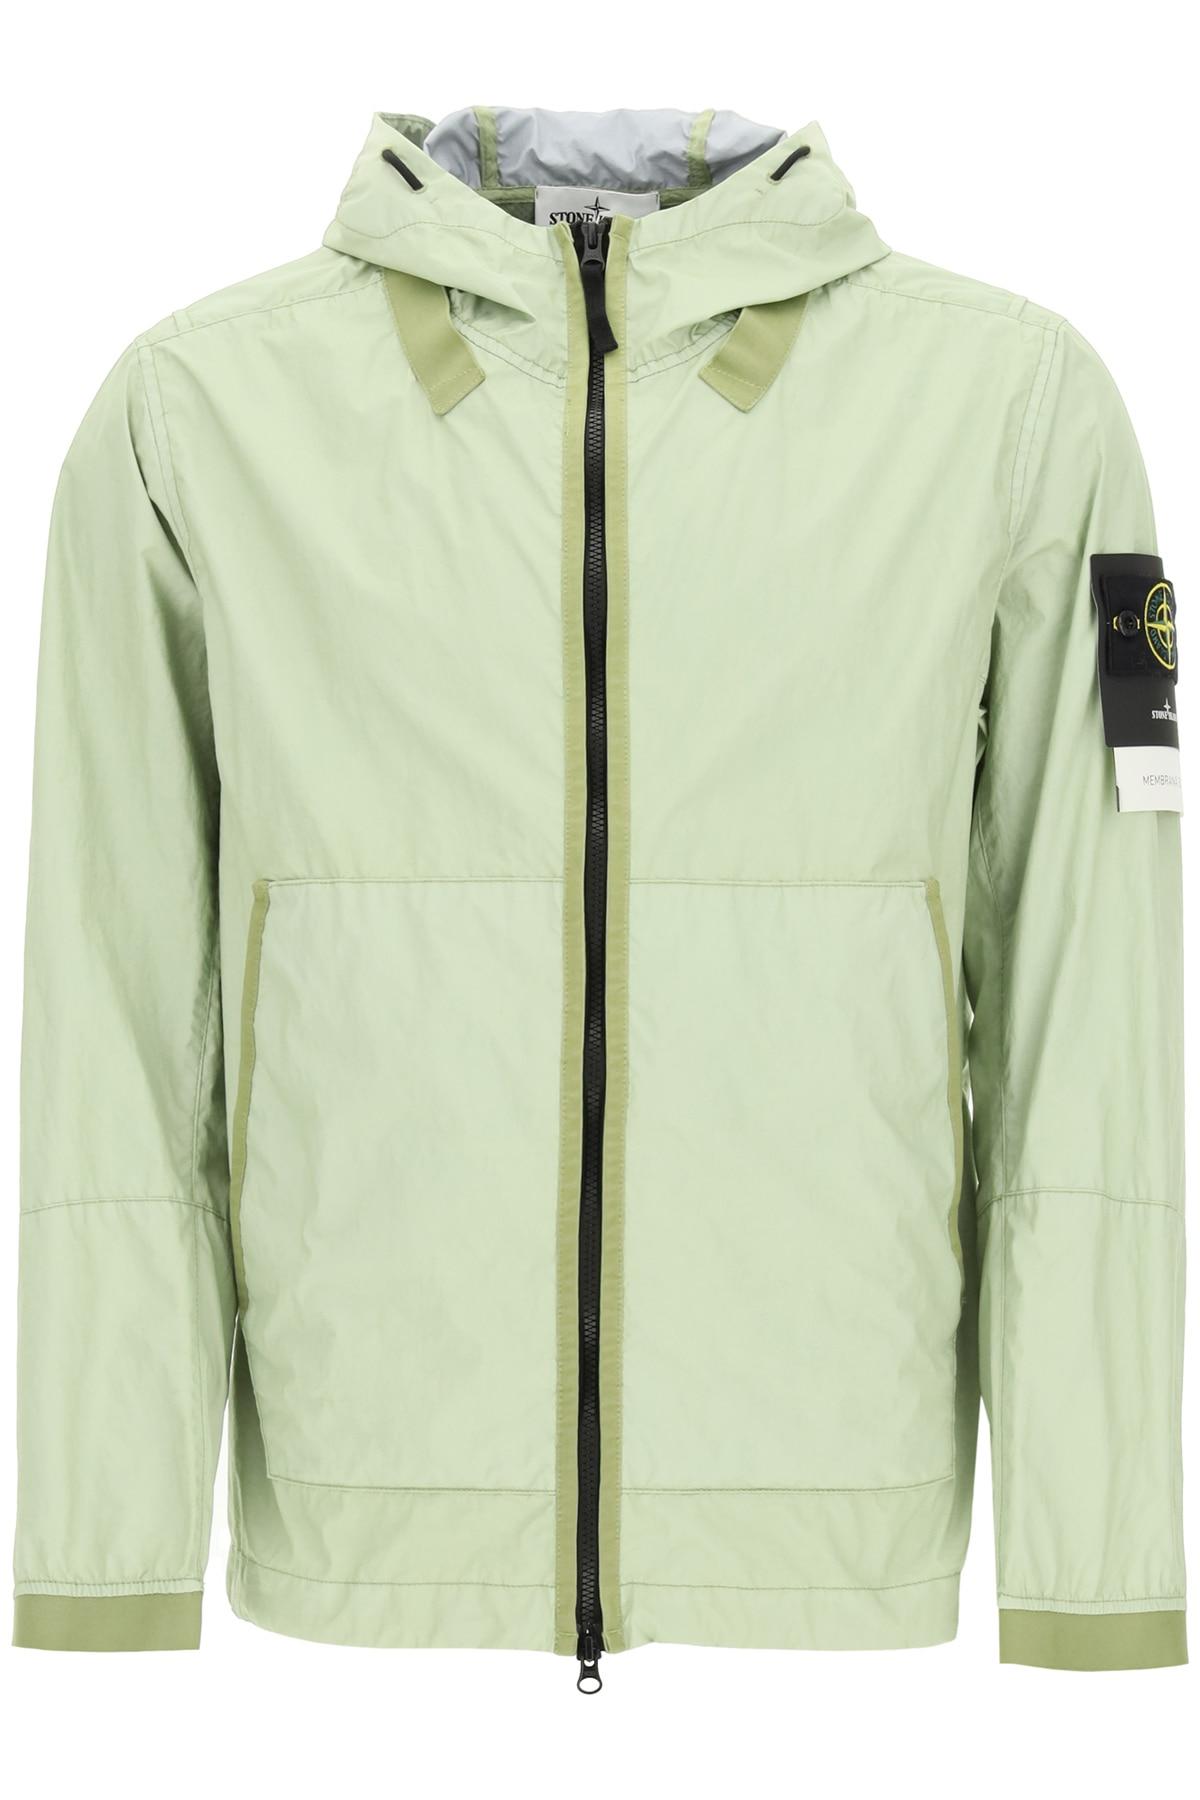 Stone Island Membrana 3l Tc Jacket in Green for Men | Lyst Australia